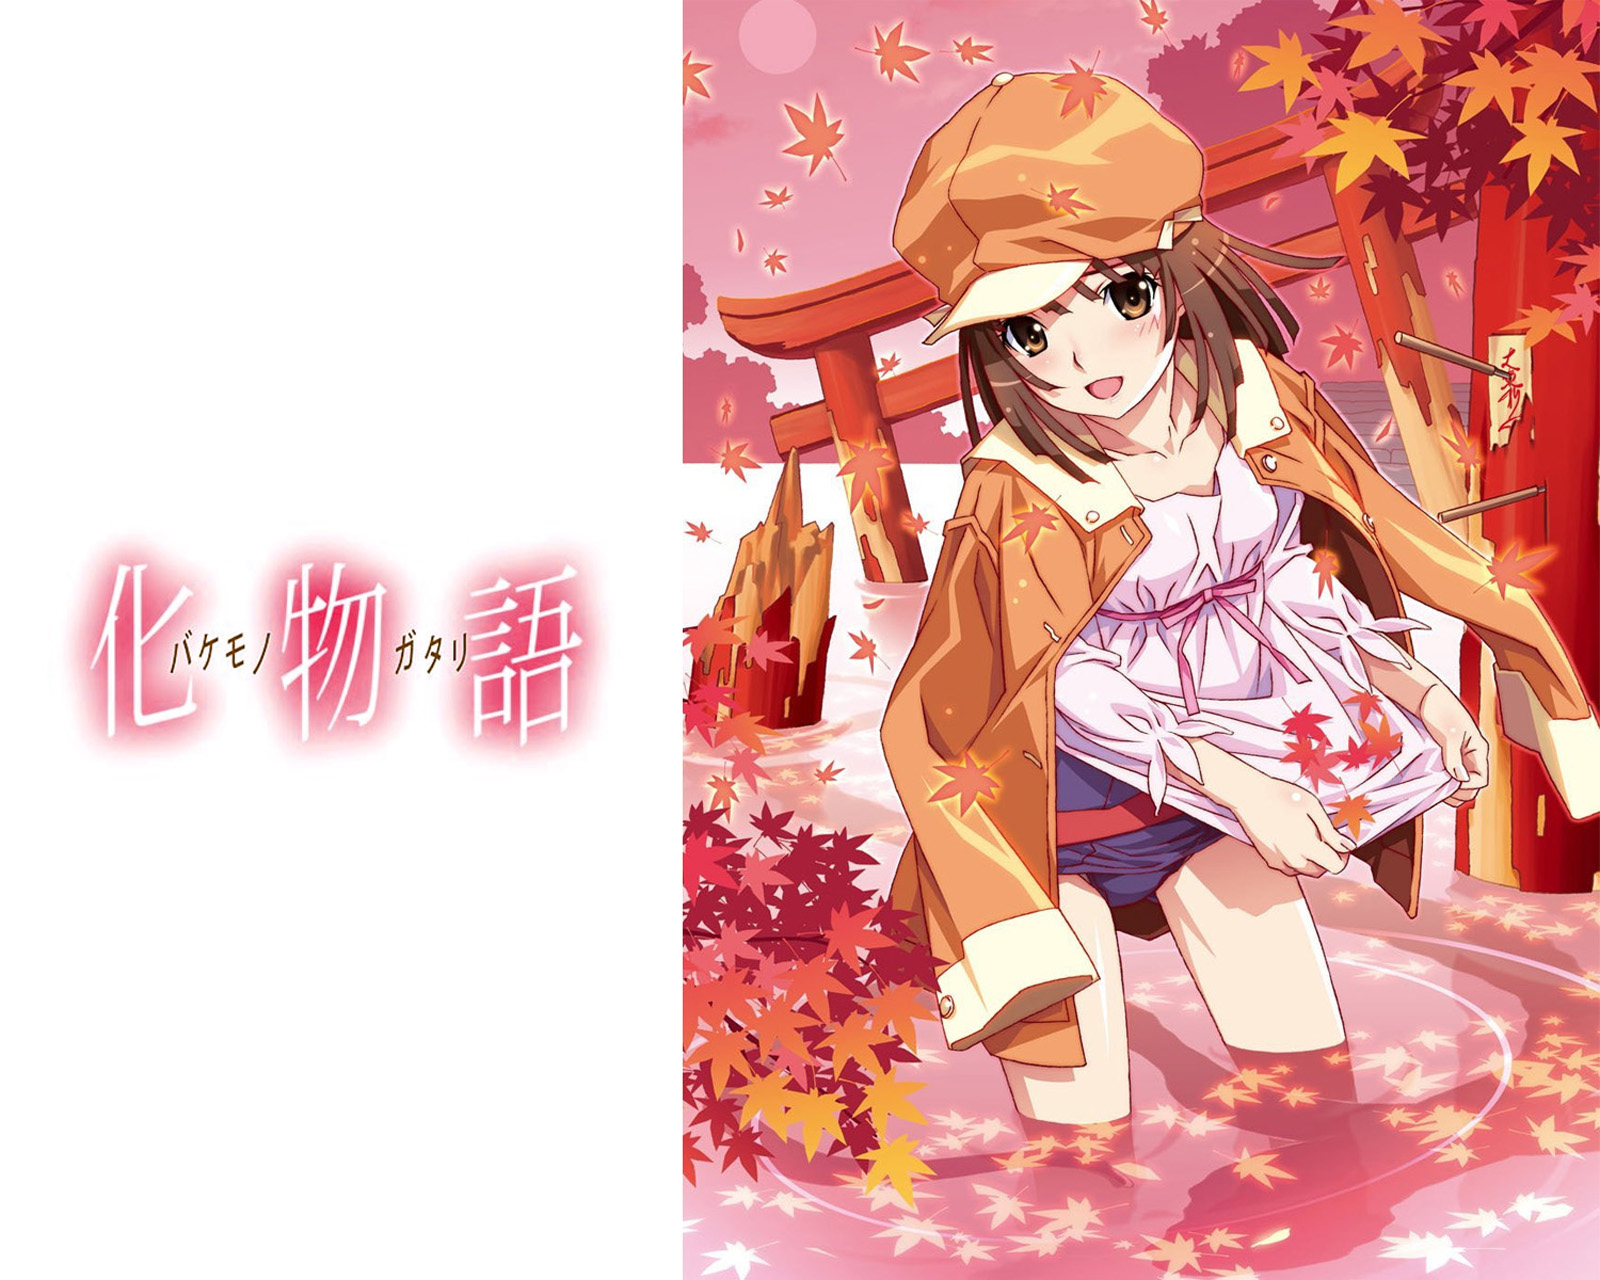 Free download wallpaper Anime, Monogatari (Series), Nadeko Sengoku on your PC desktop